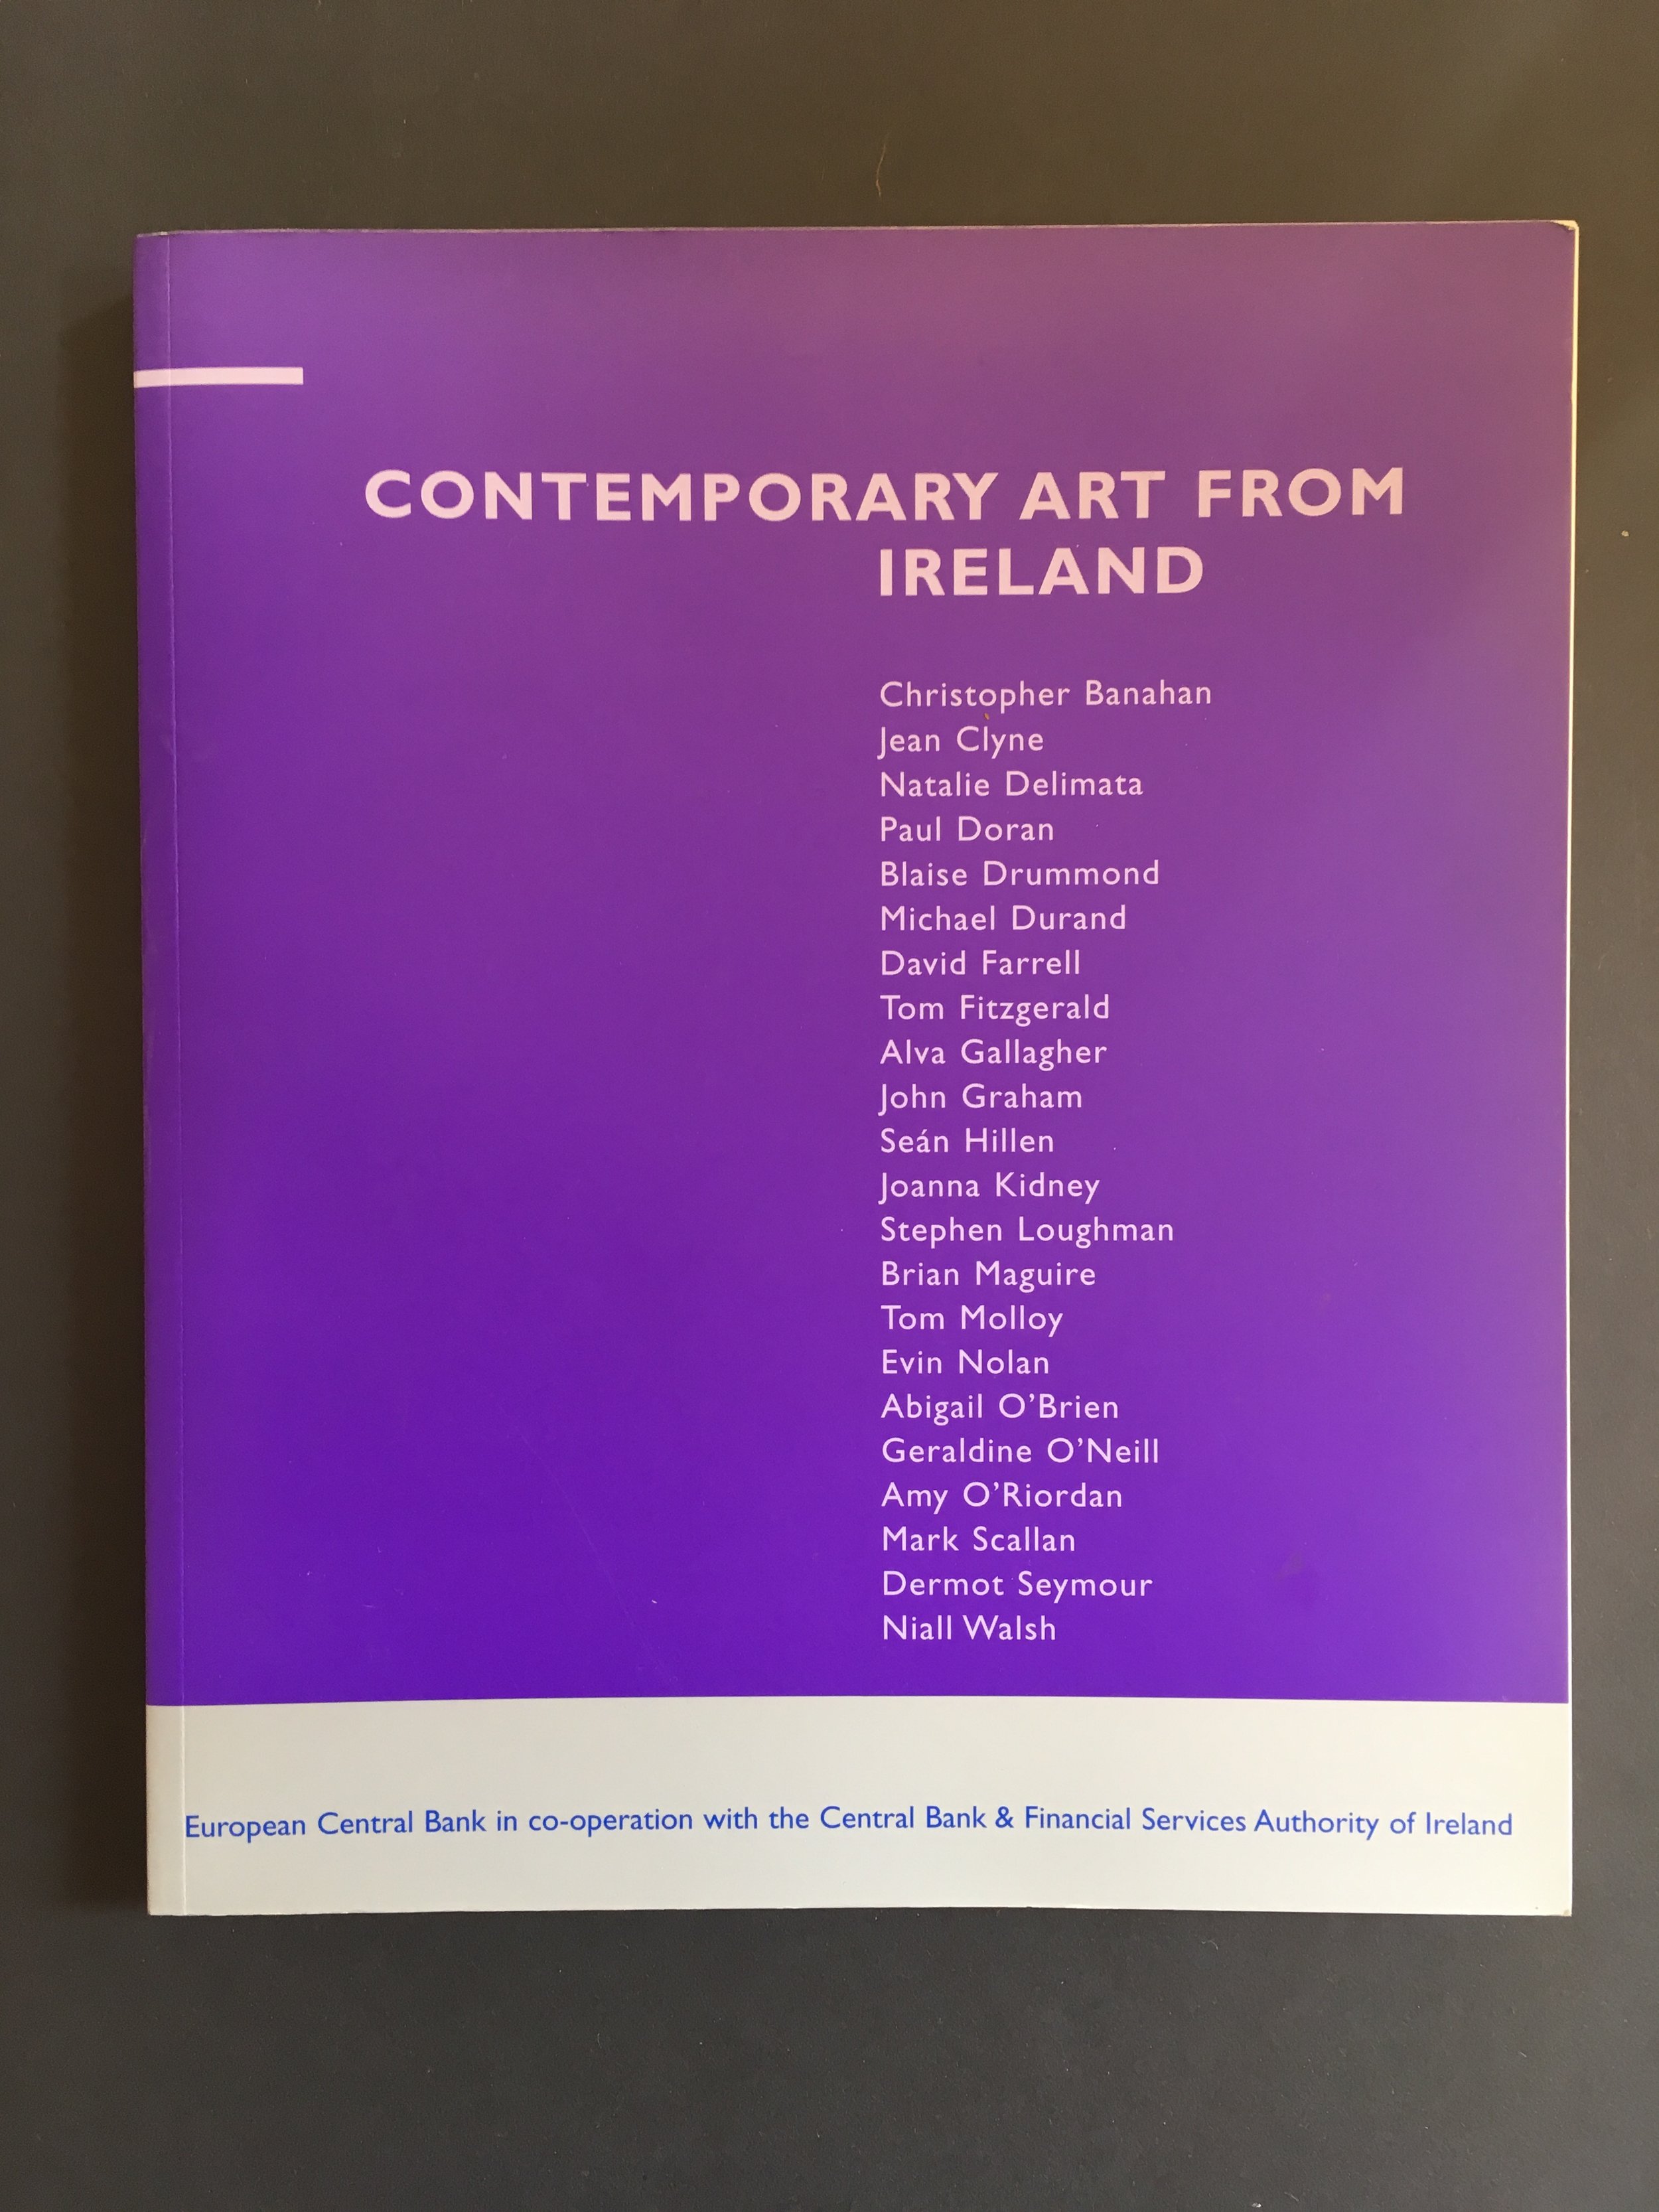 Contemporary Art From Ireland 2005